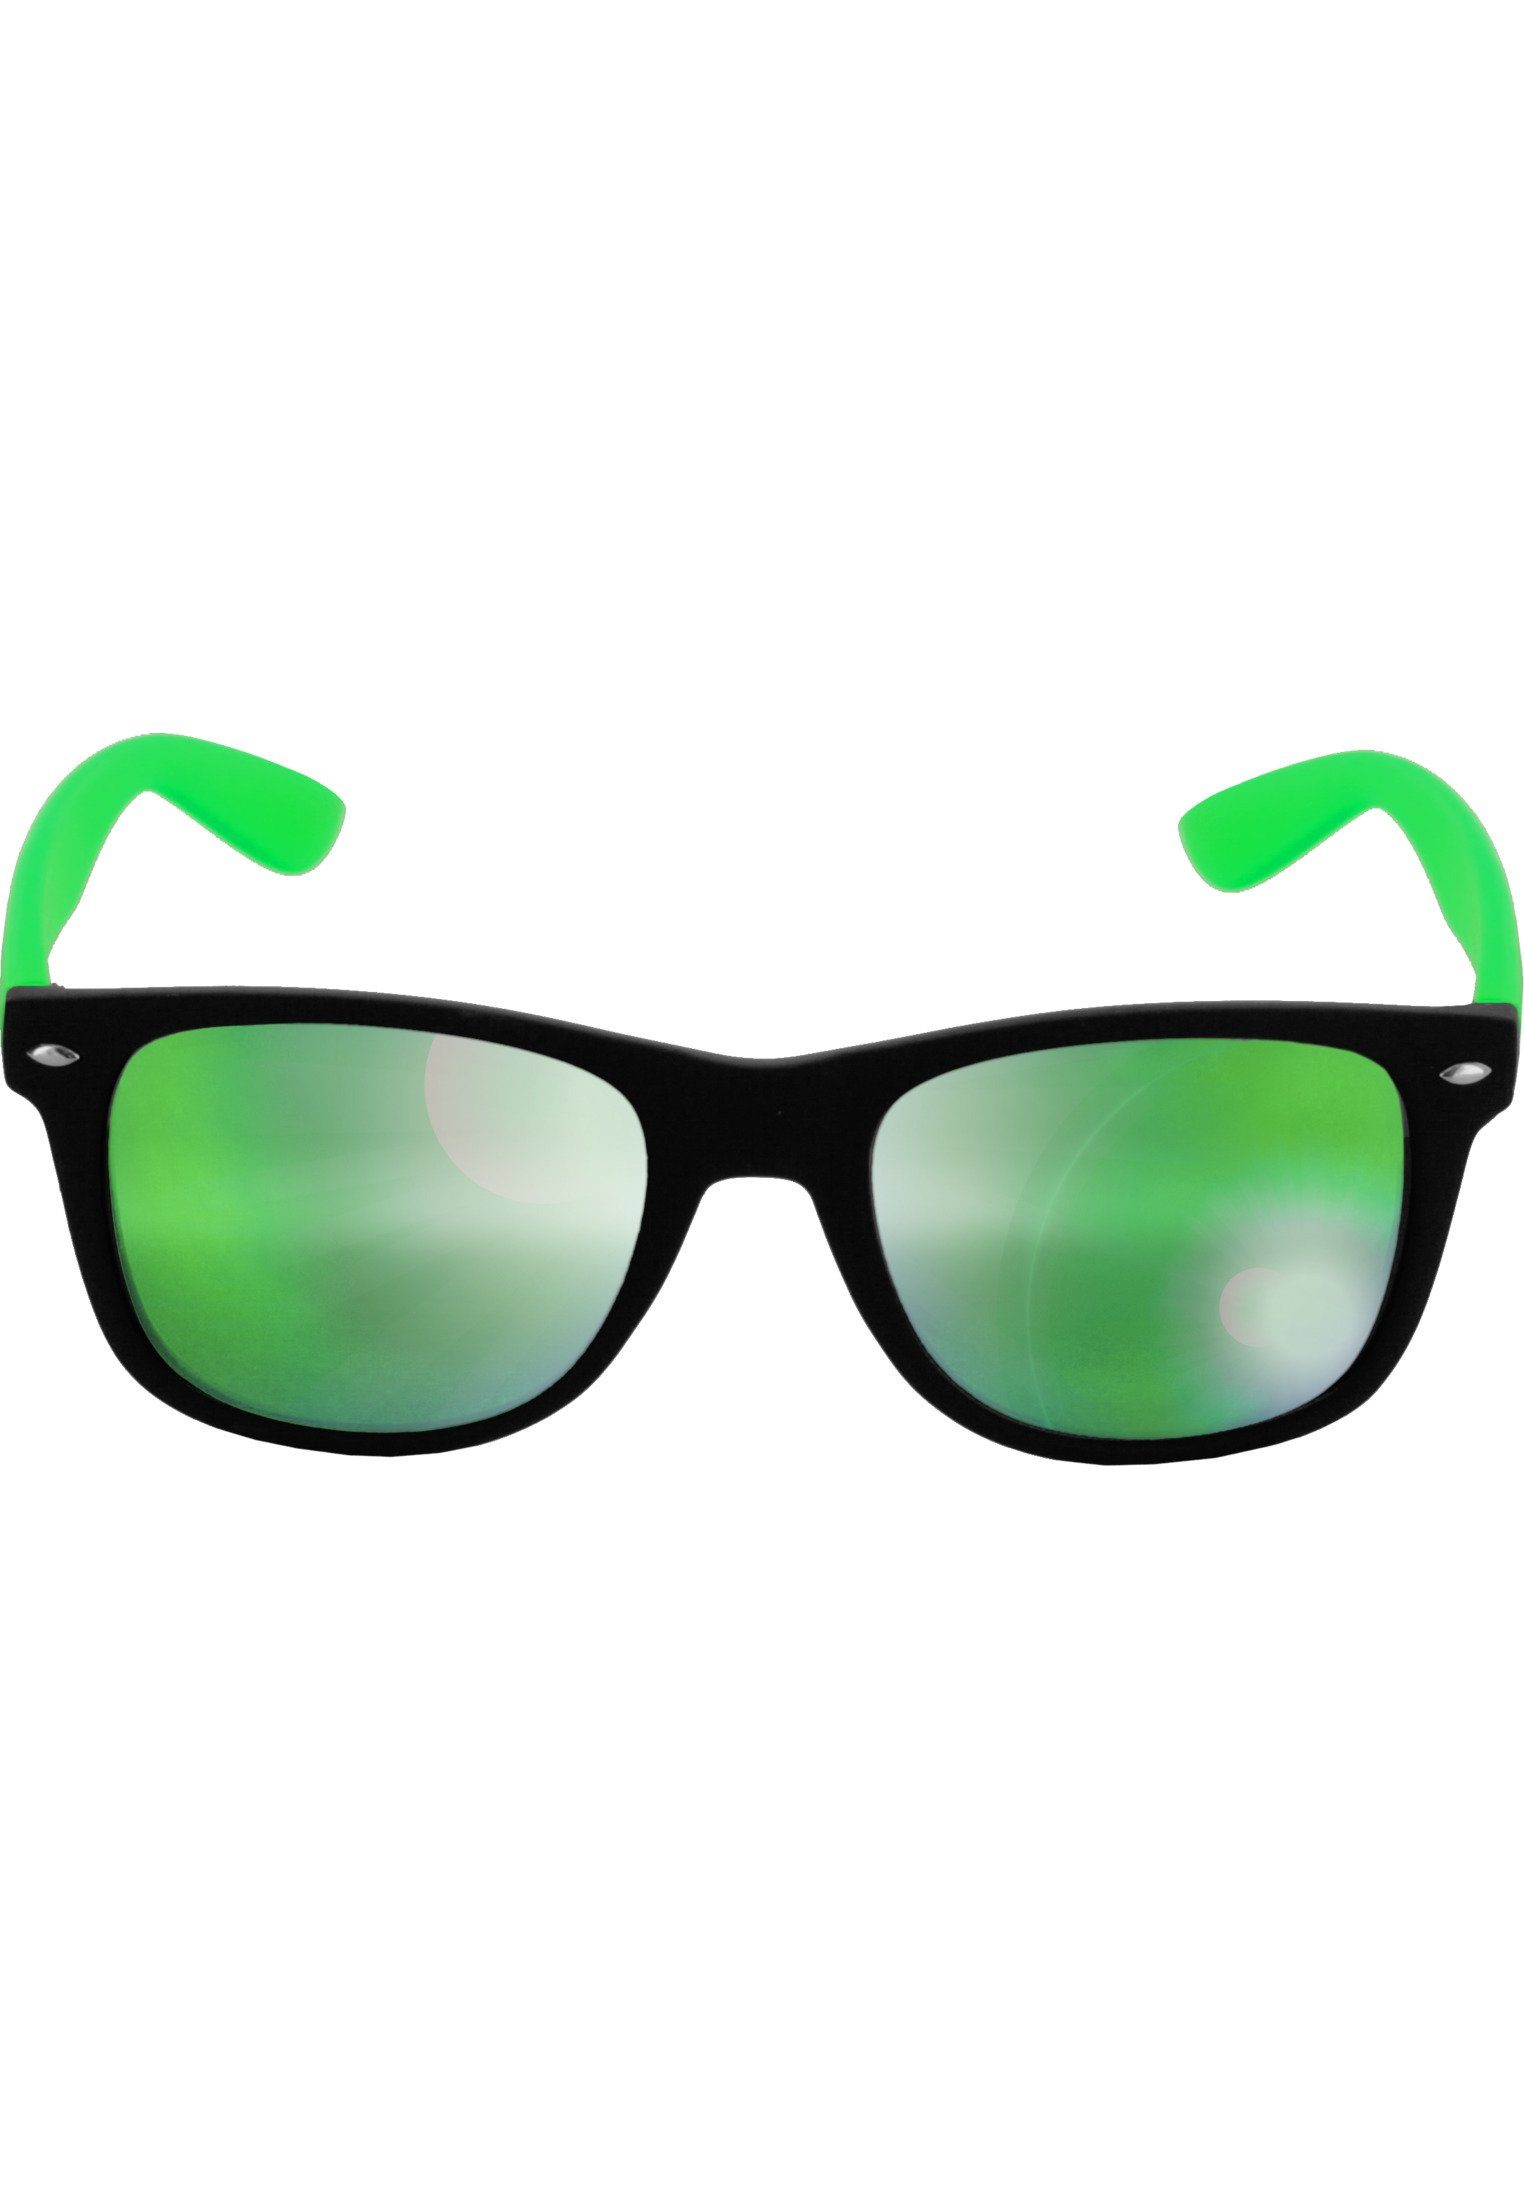 MSTRDS Sonnenbrille Accessoires Sunglasses Likoma Mirror blk/lgr